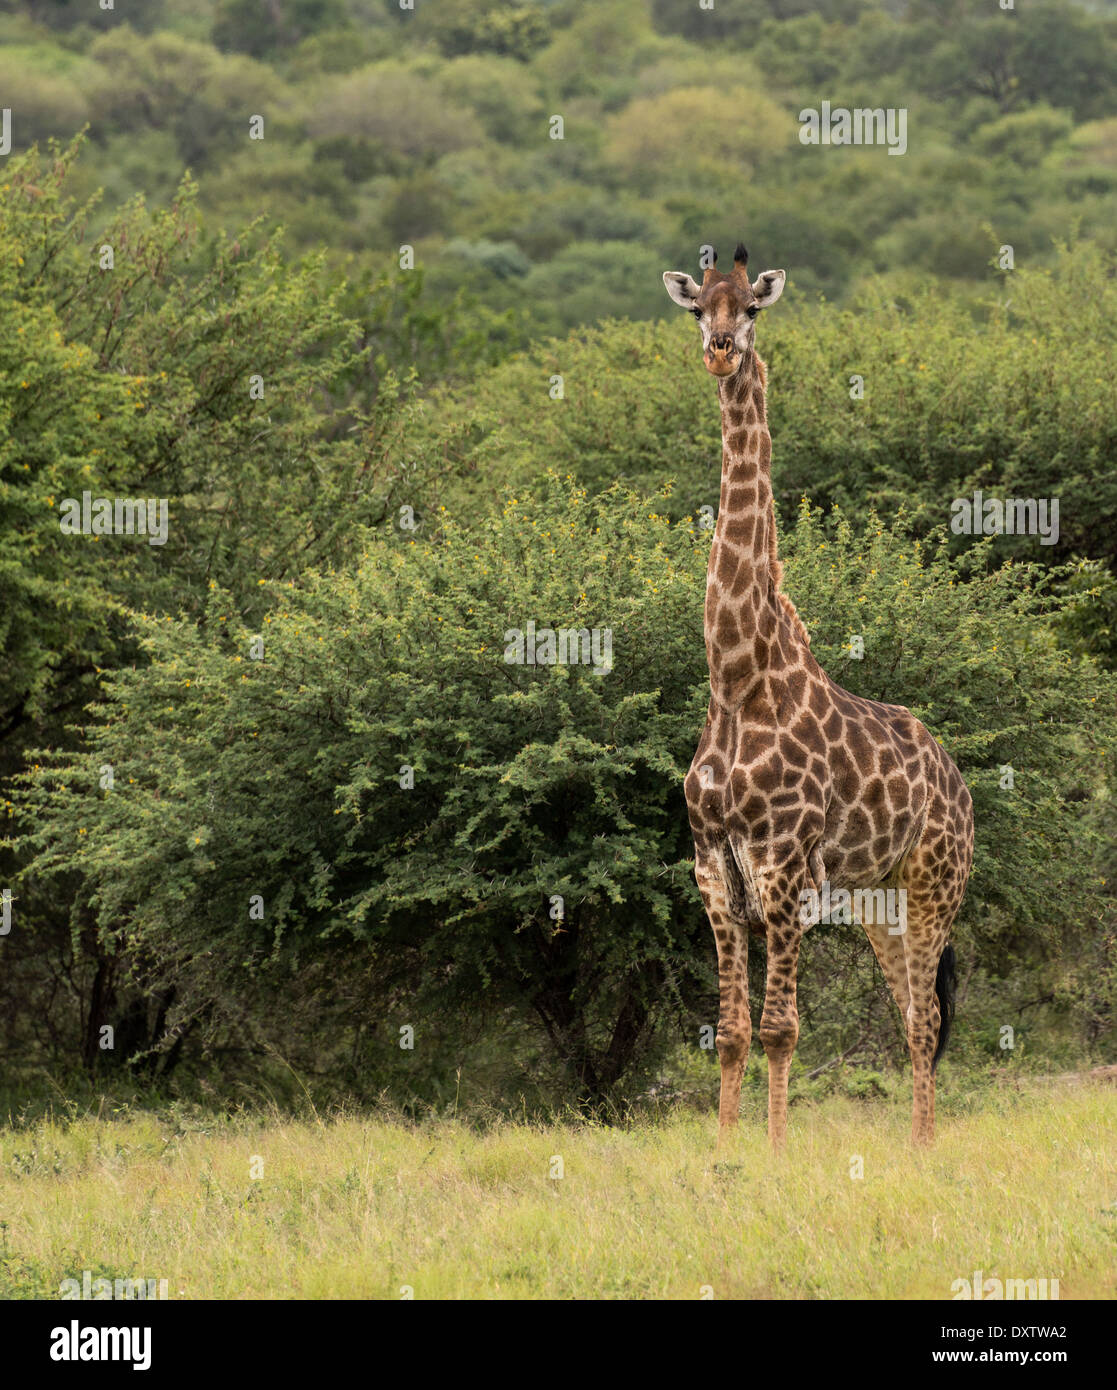 Girafe en Afrique du Sud sur safari parc Kruger national Banque D'Images